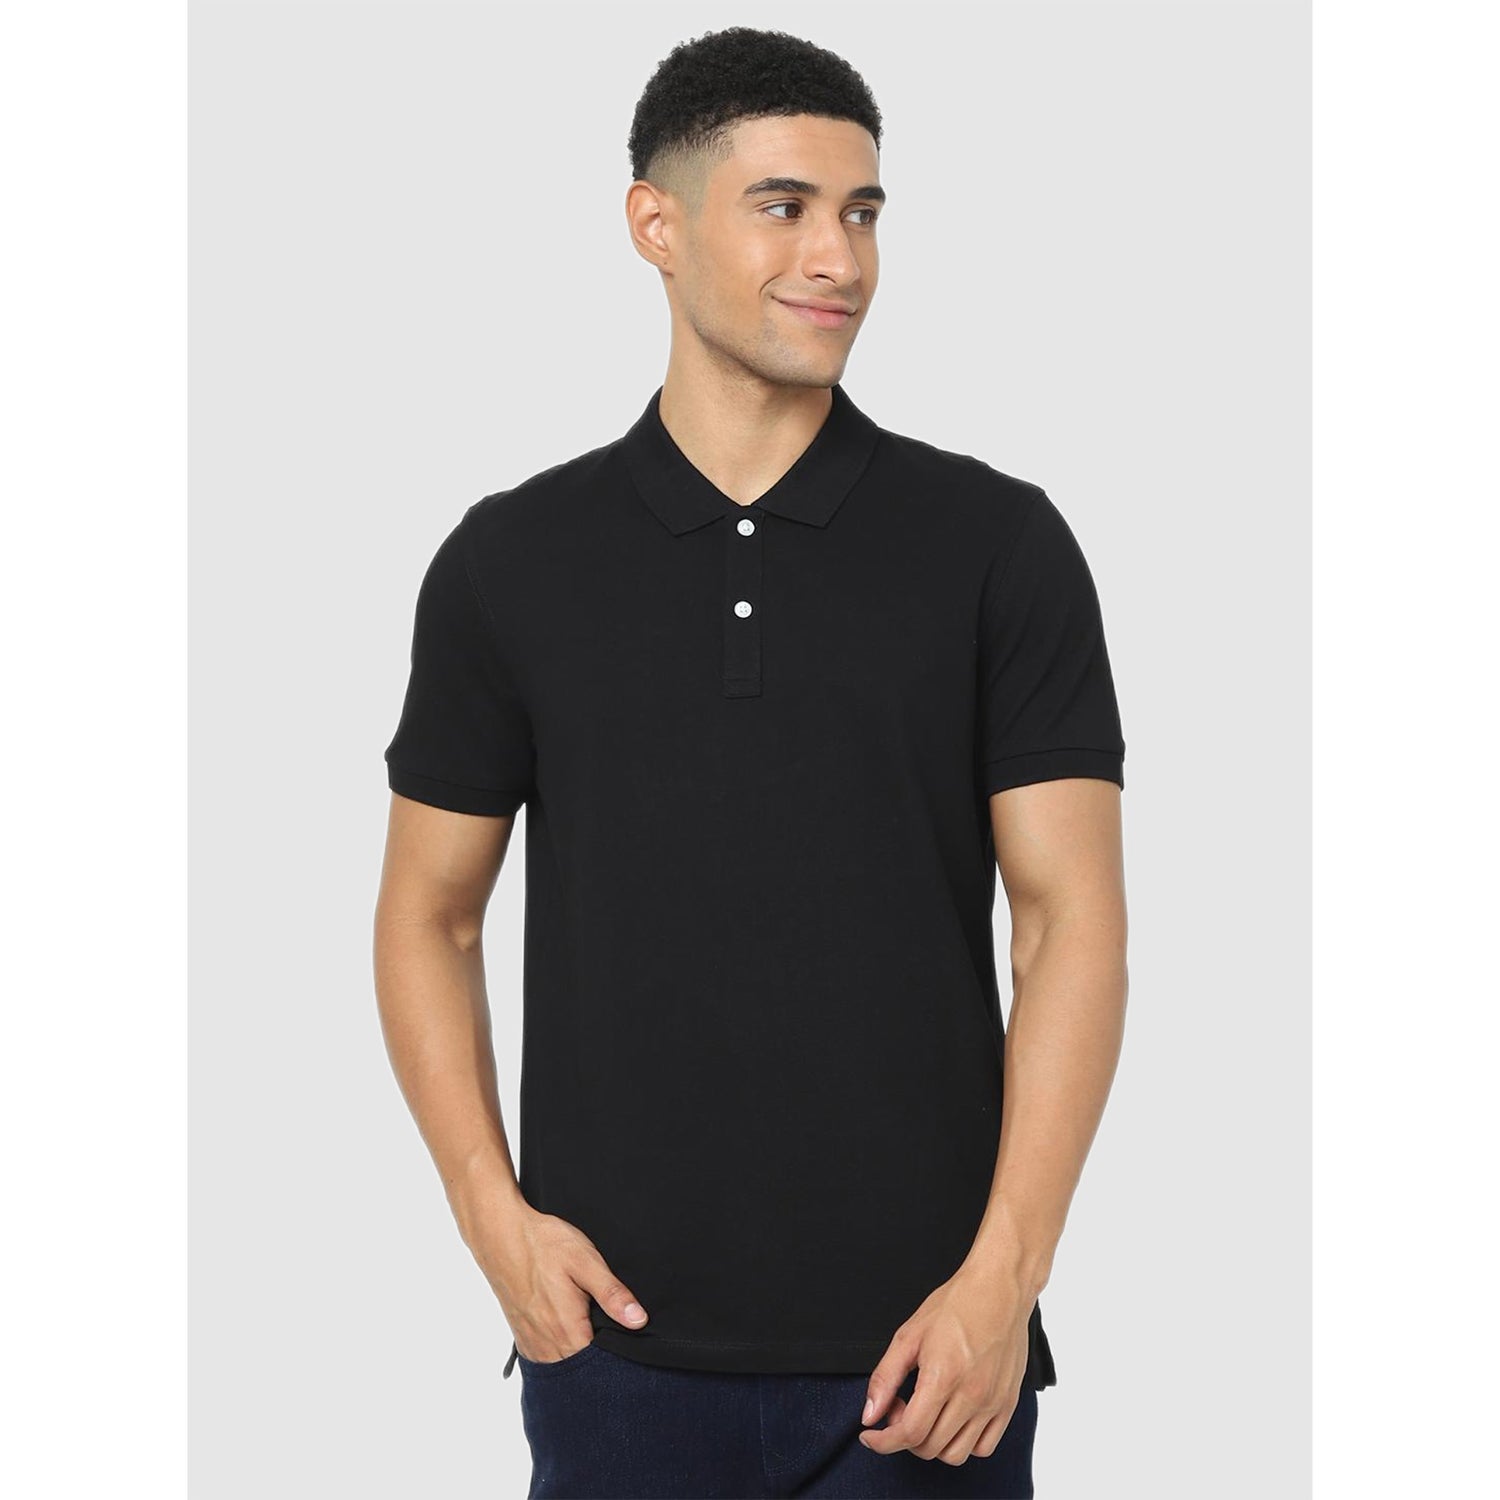 Black Solid Regular Fit T-Shirt (Various Sizes)